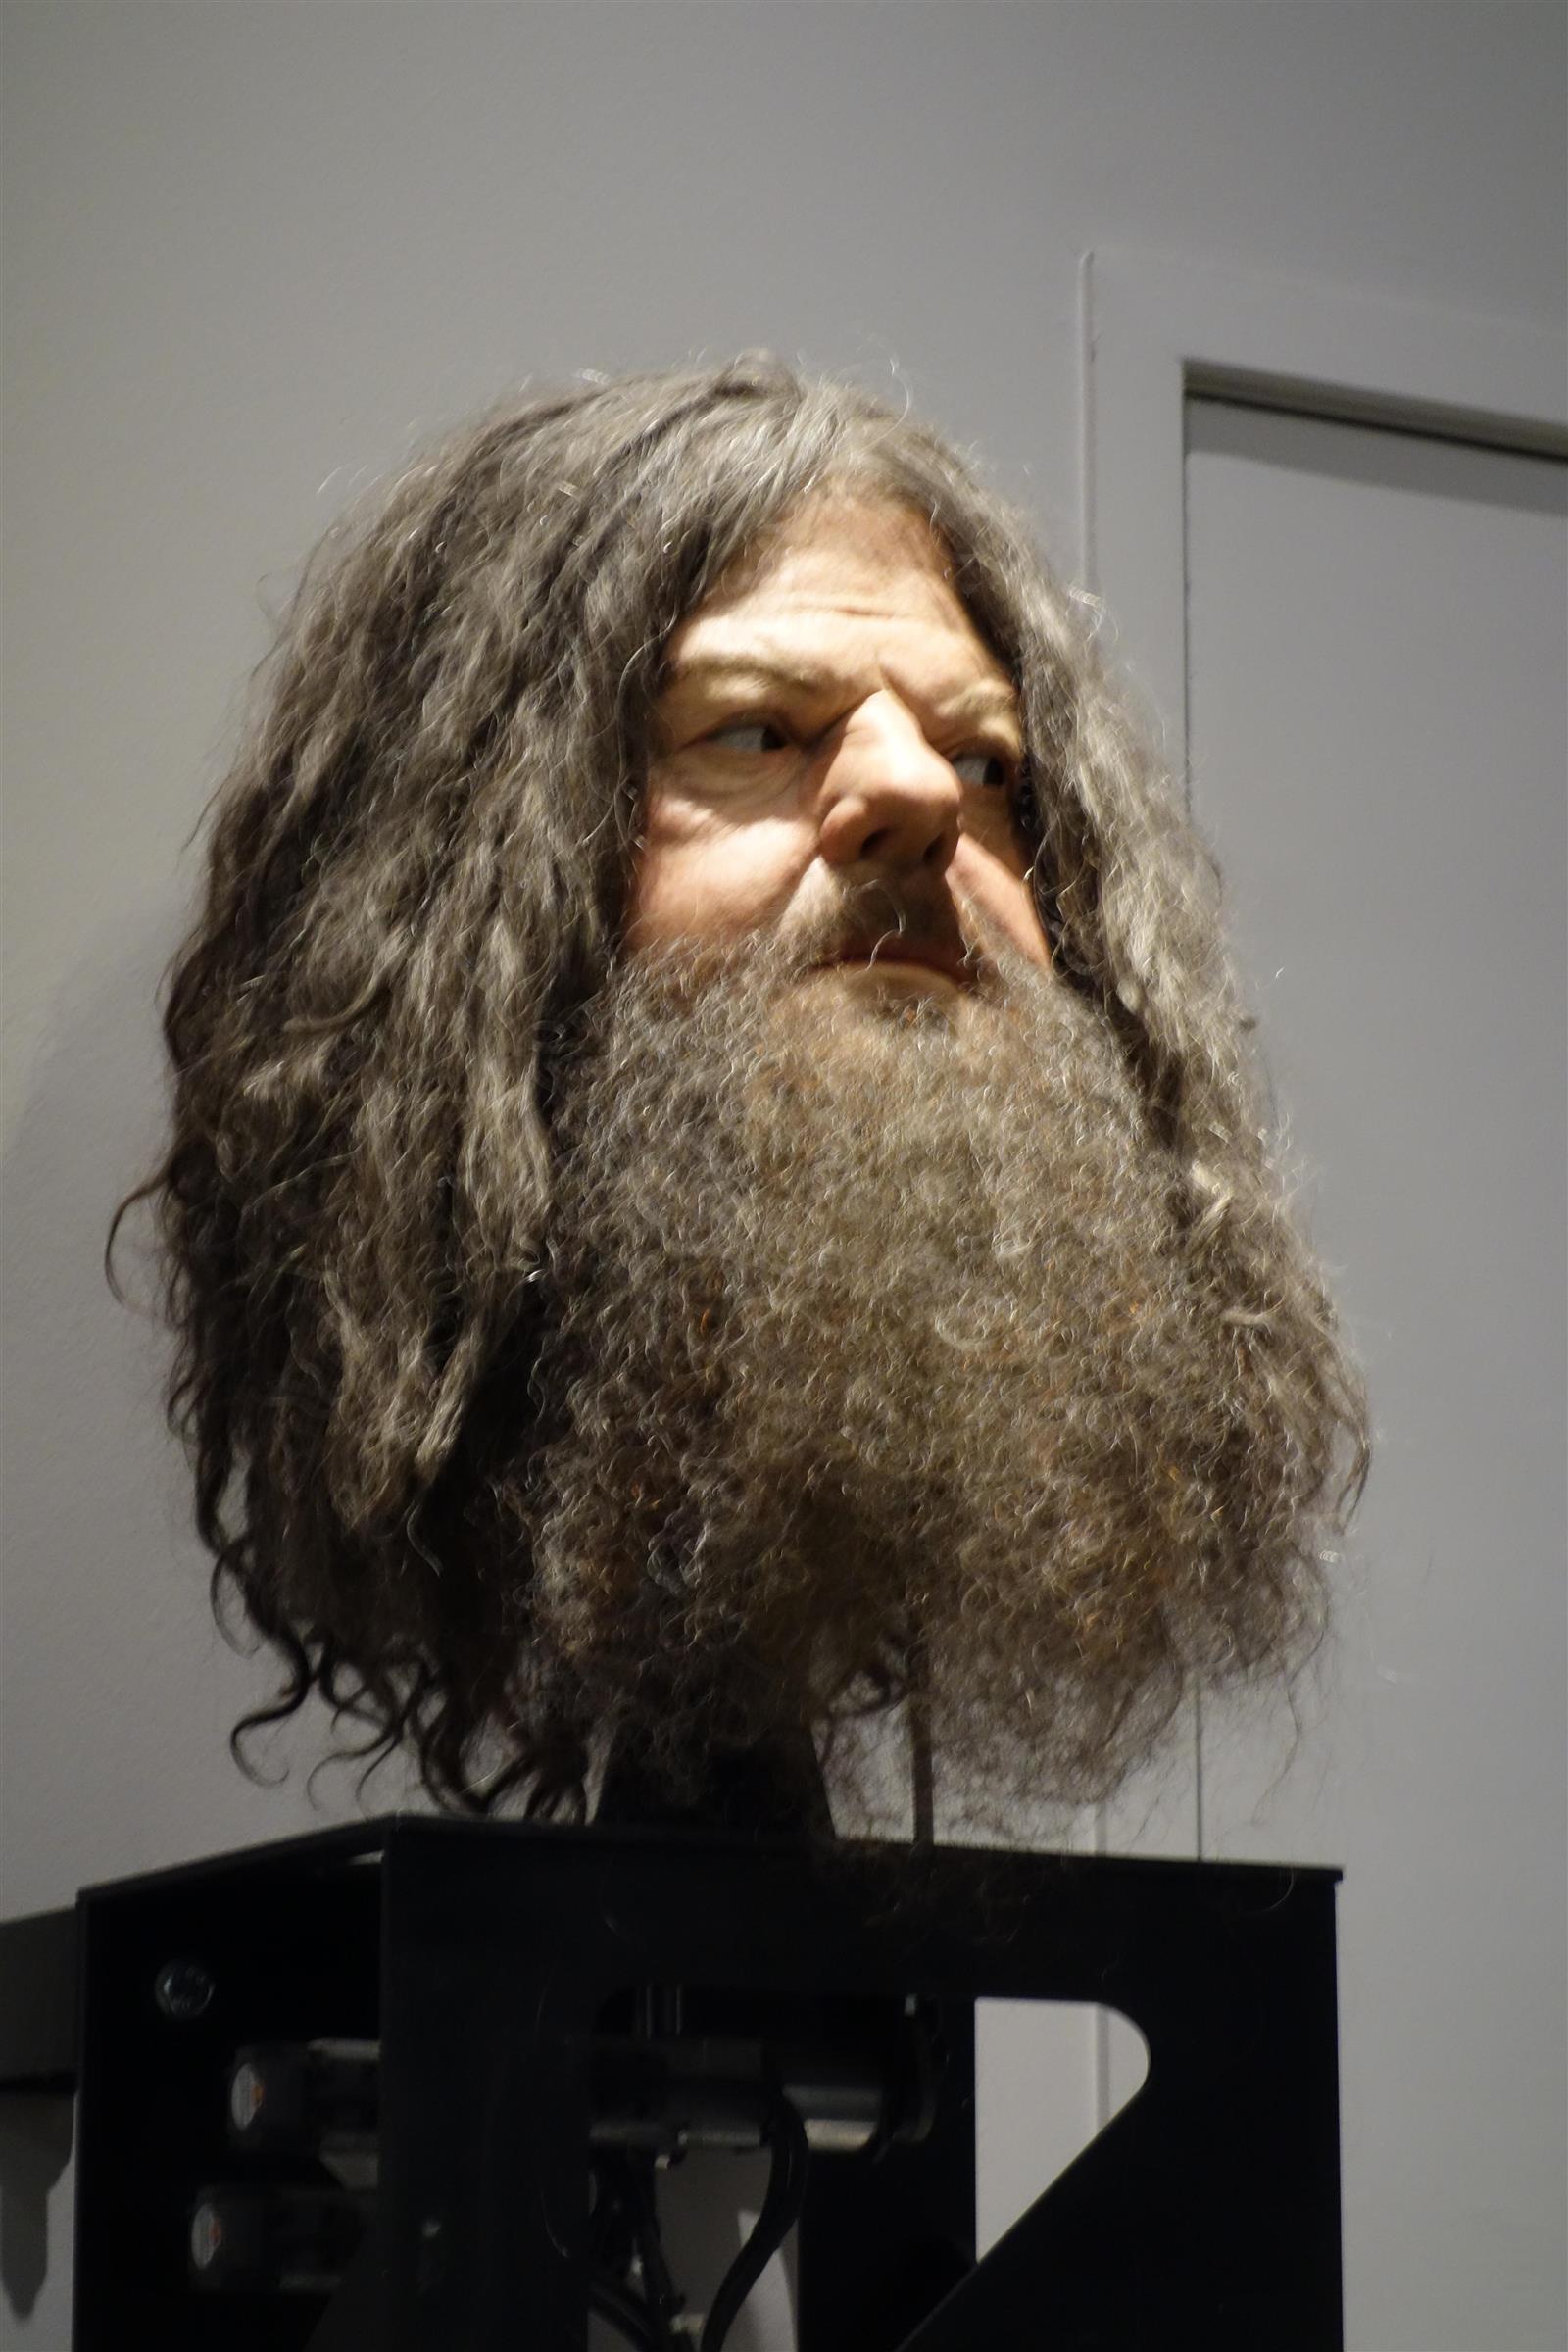 69. Animatronic Hagrid Head